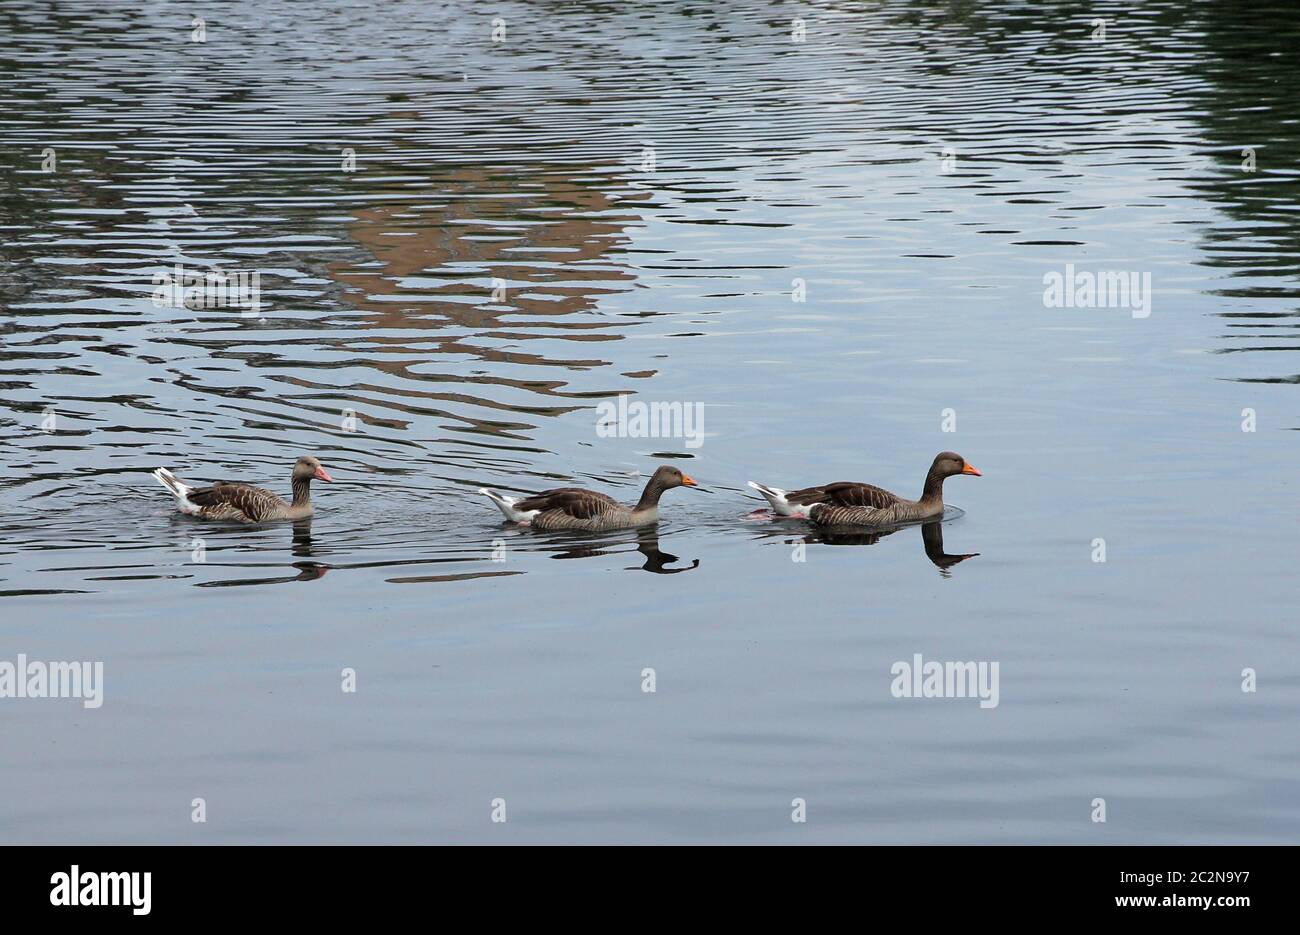 Three beautiful ducks swimming on the lake. Stock Photo